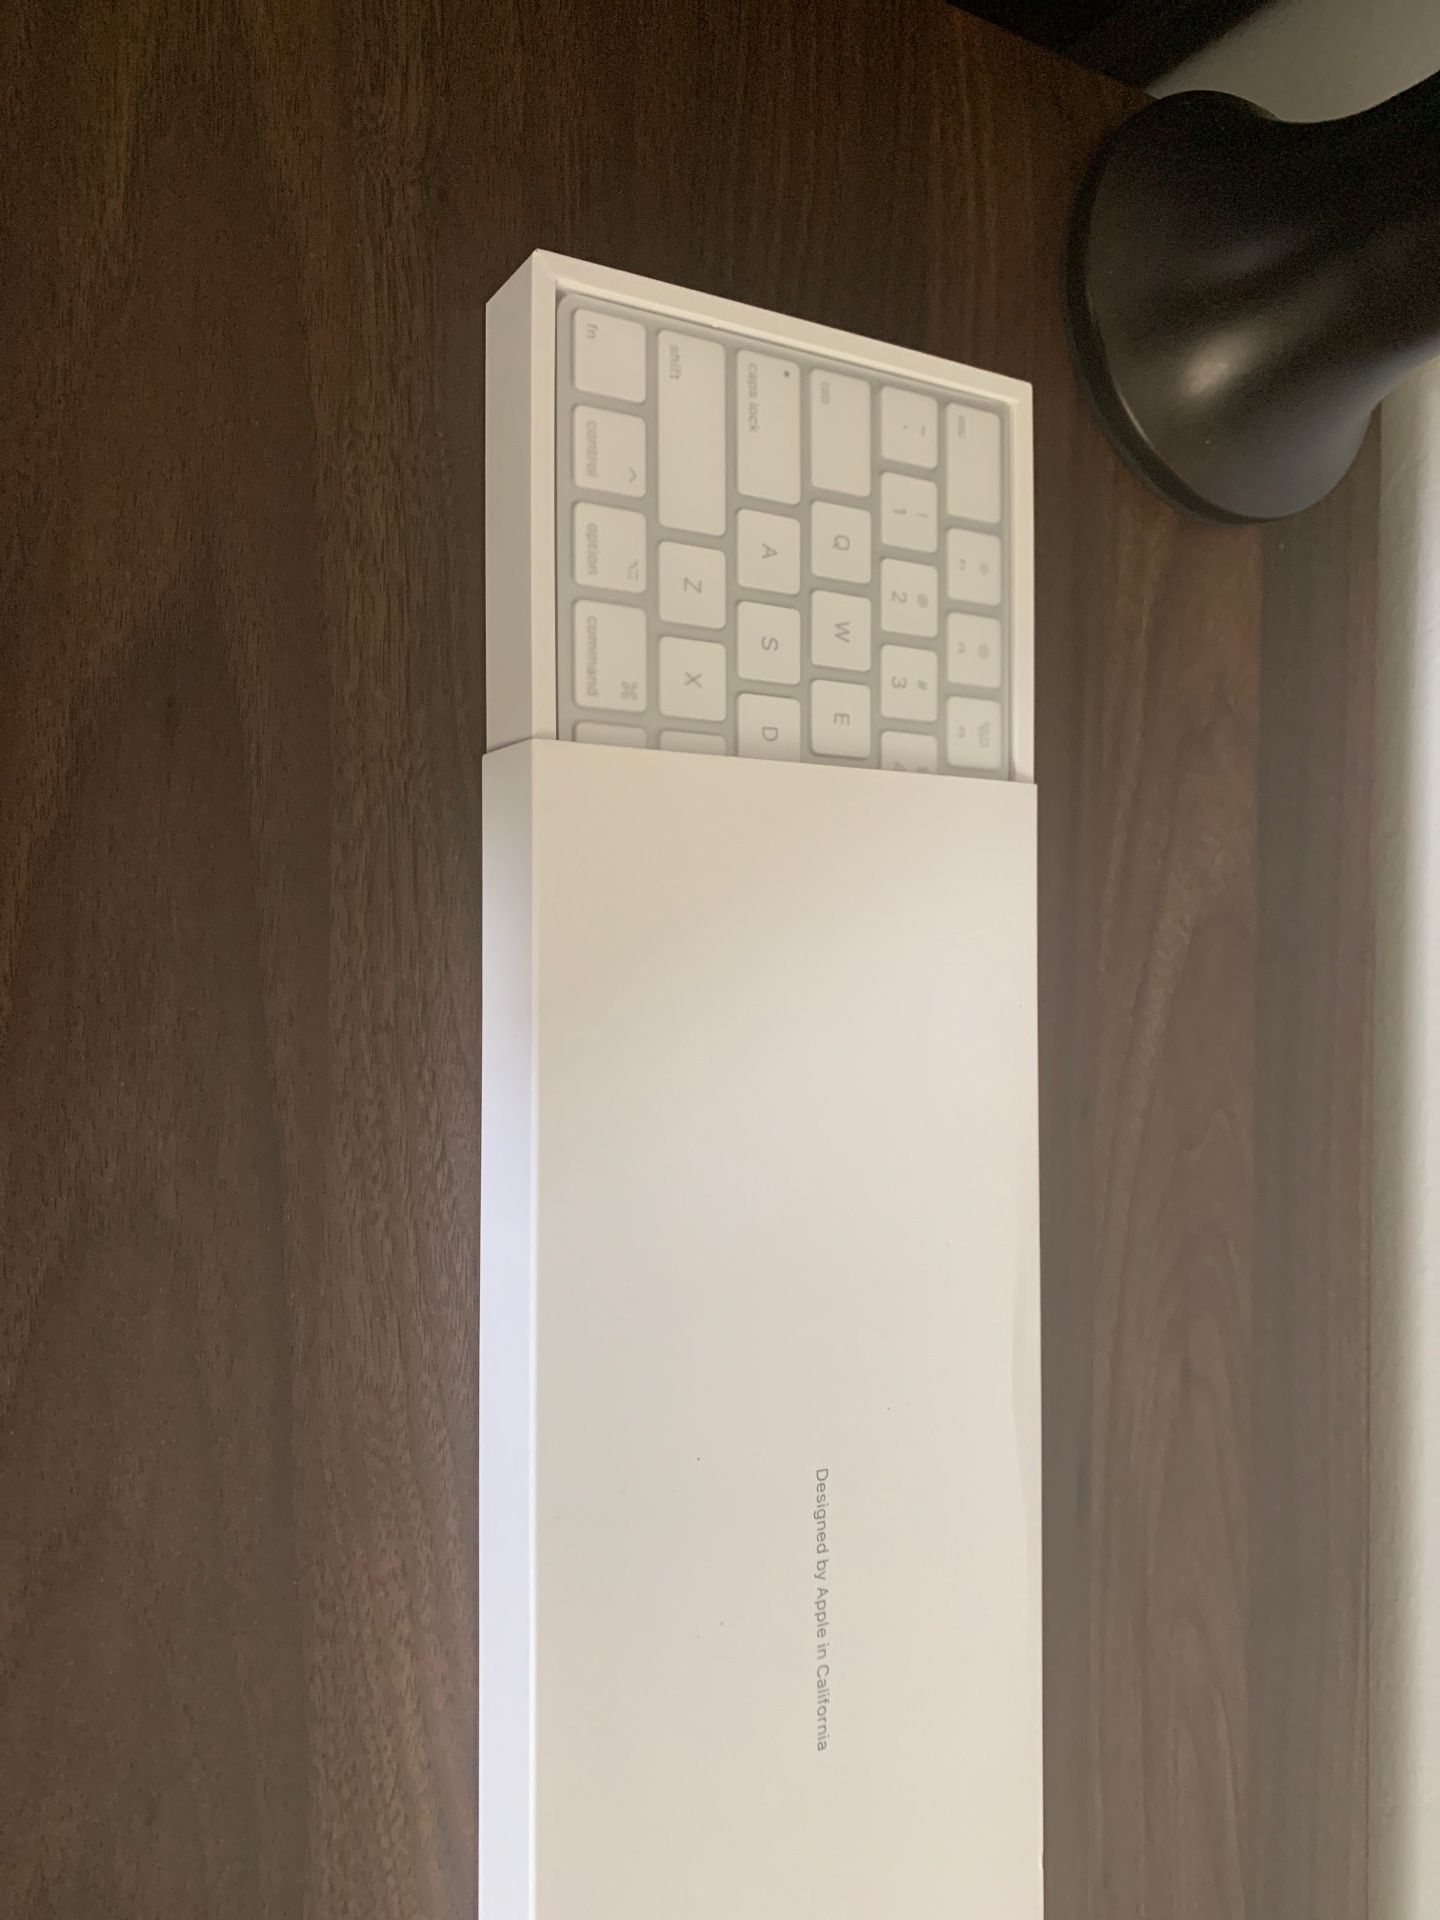 Brand New (Never Used) Apple Magic Keyboard